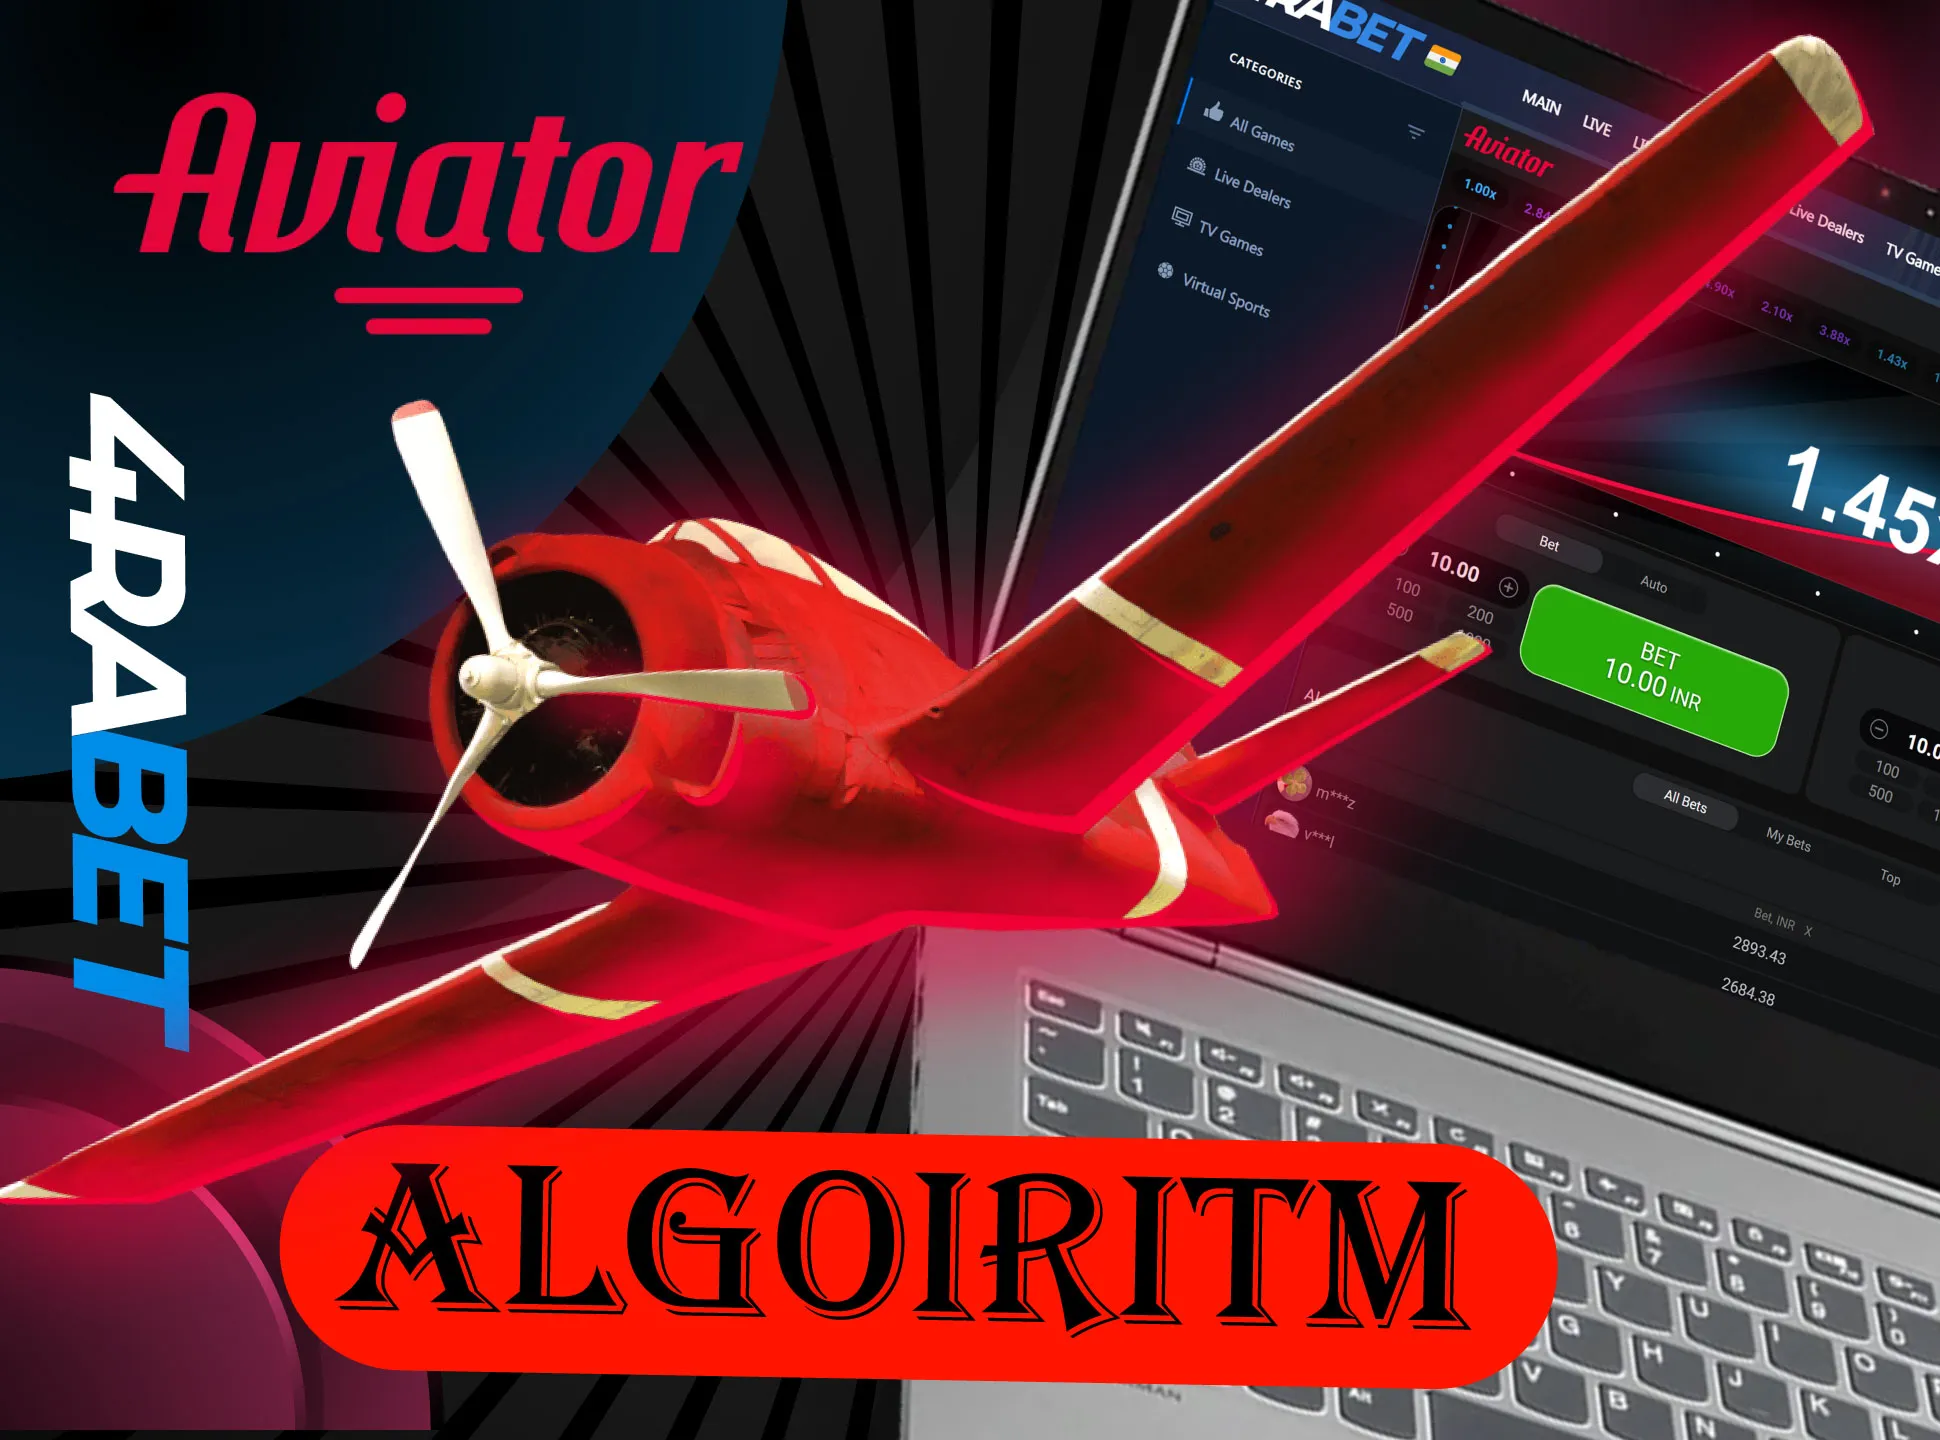 Aviator is based on the random numbers generator.